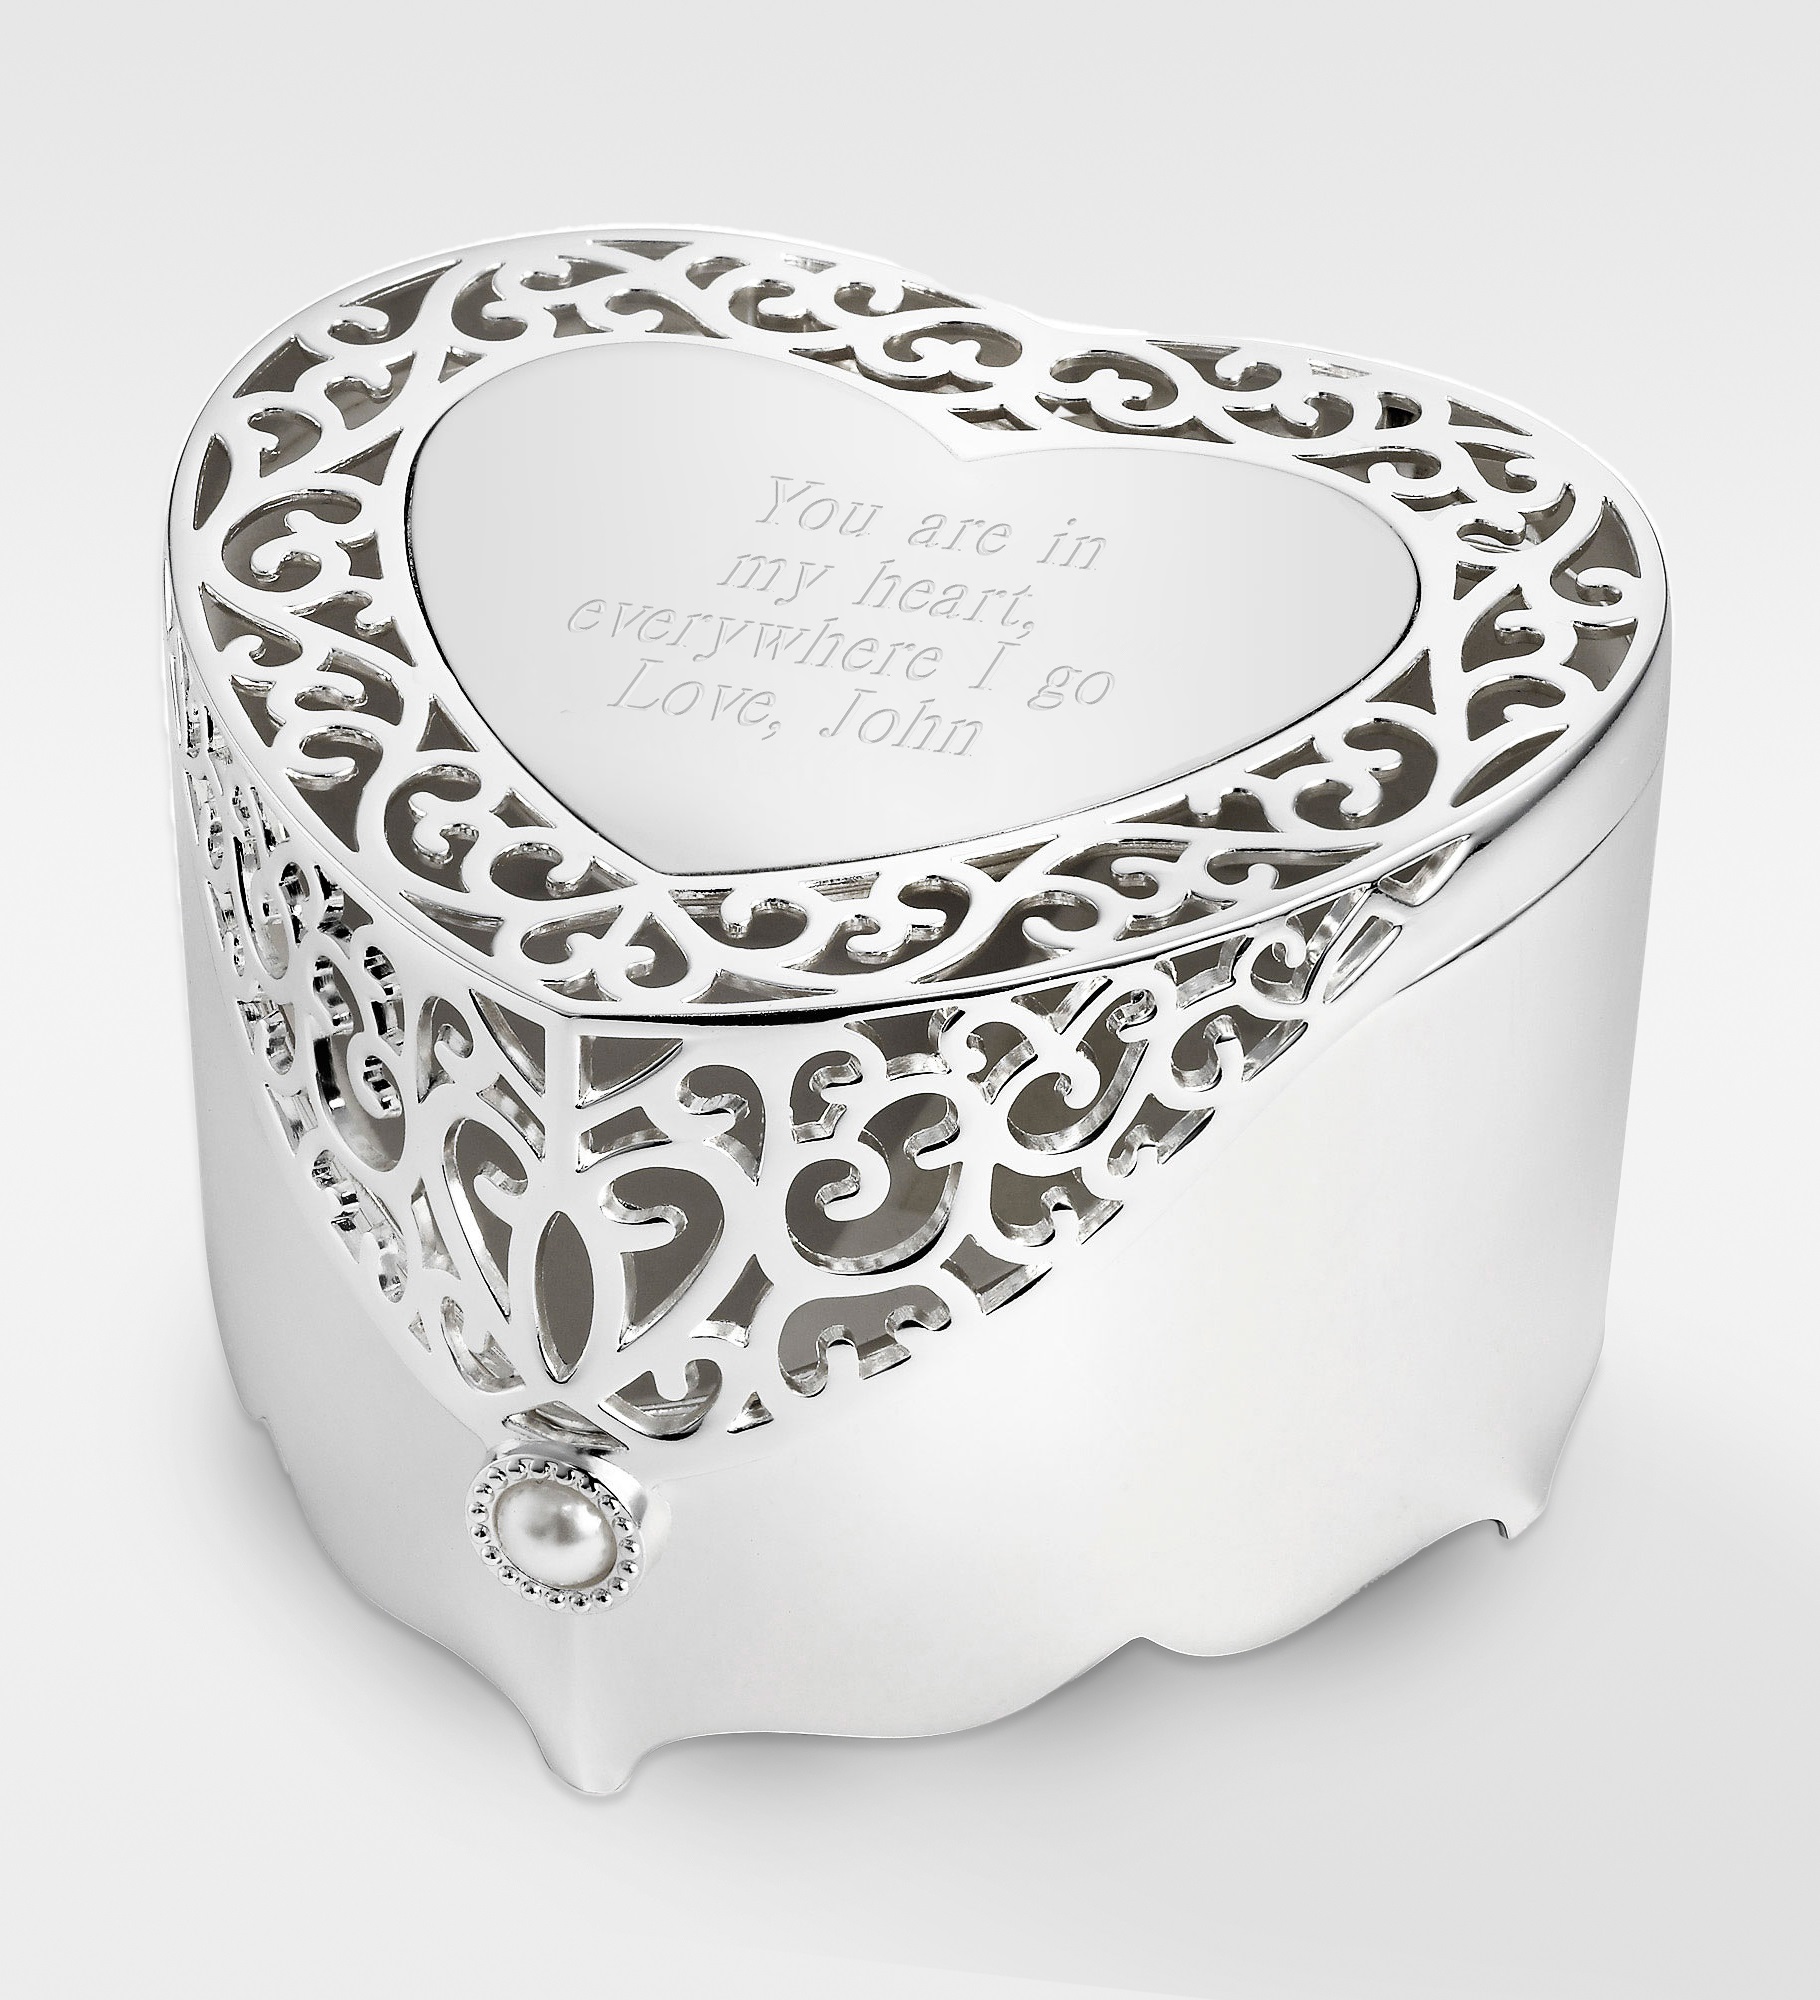 Engraved Scroll Heart Keepsake Box